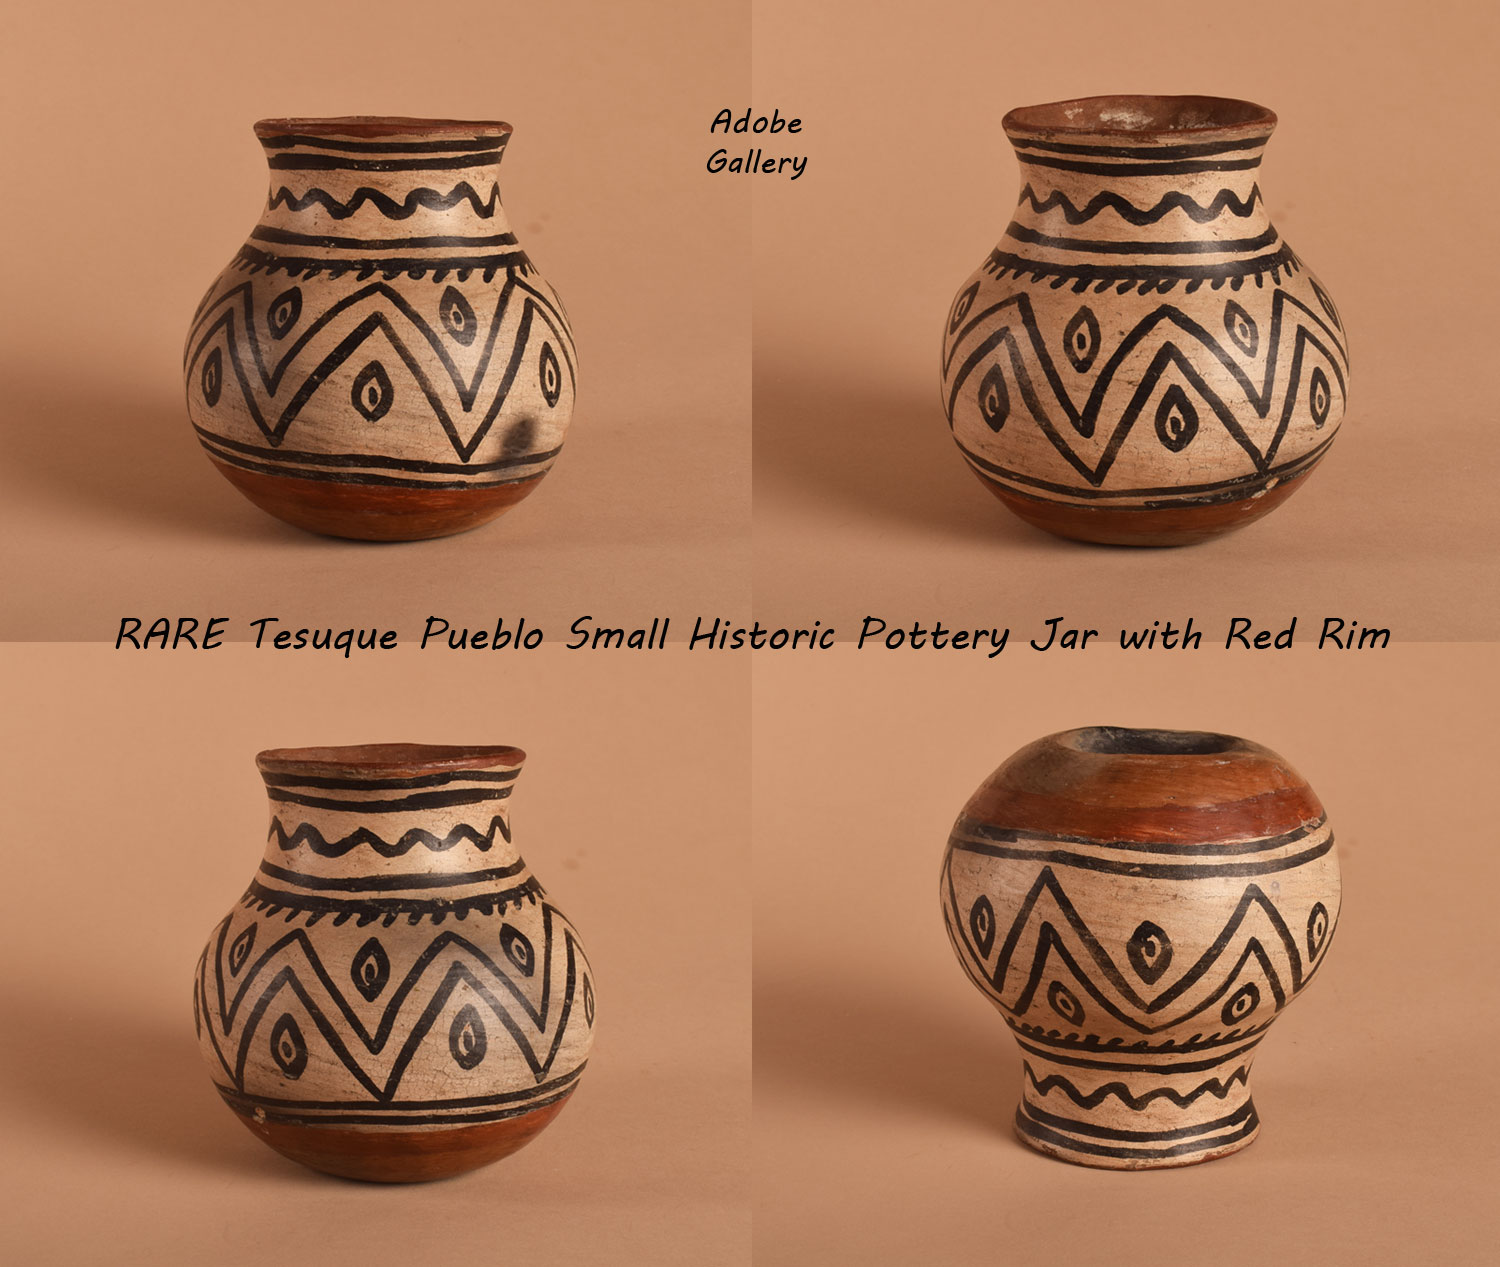 Southwest Indian Historic Pottery C4367C - Adobe Gallery, Santa Fe